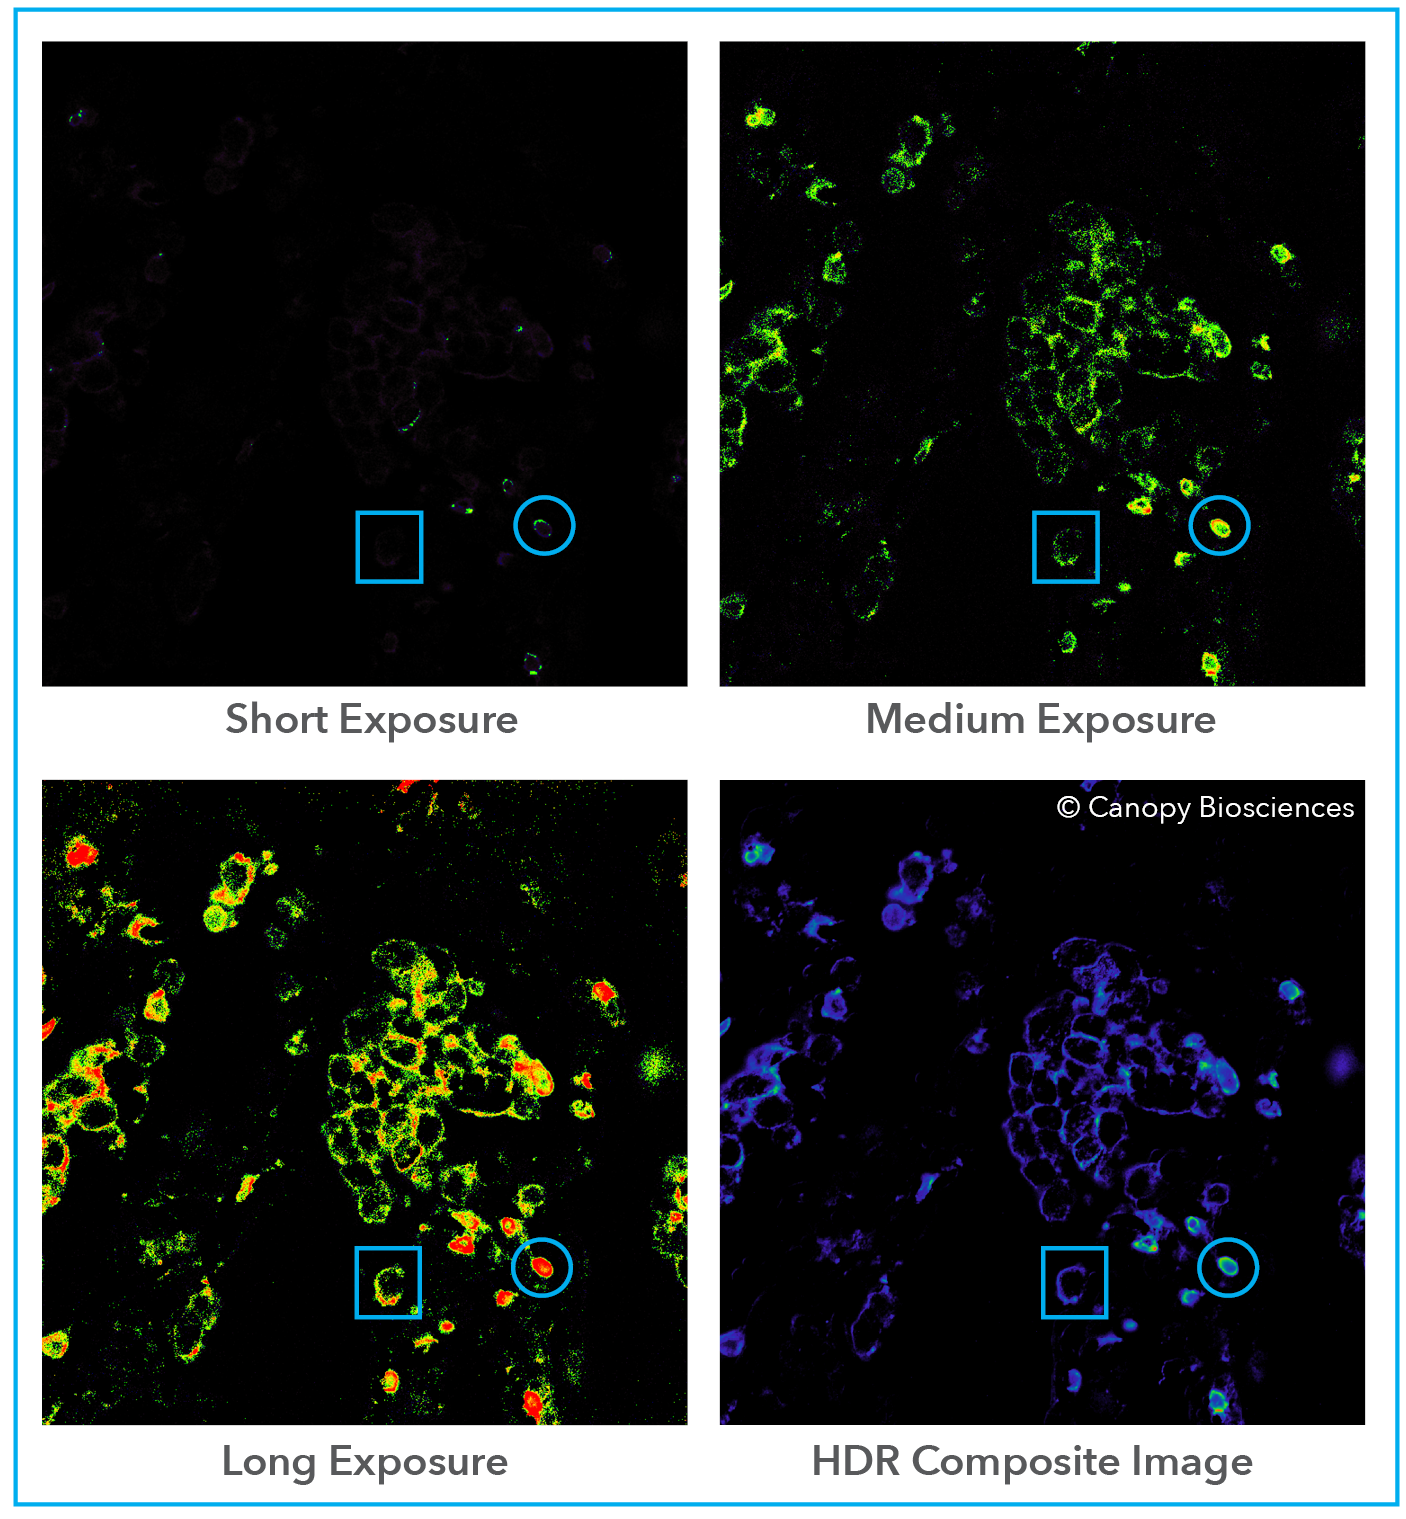 HDR immunofluorescence microscopy image